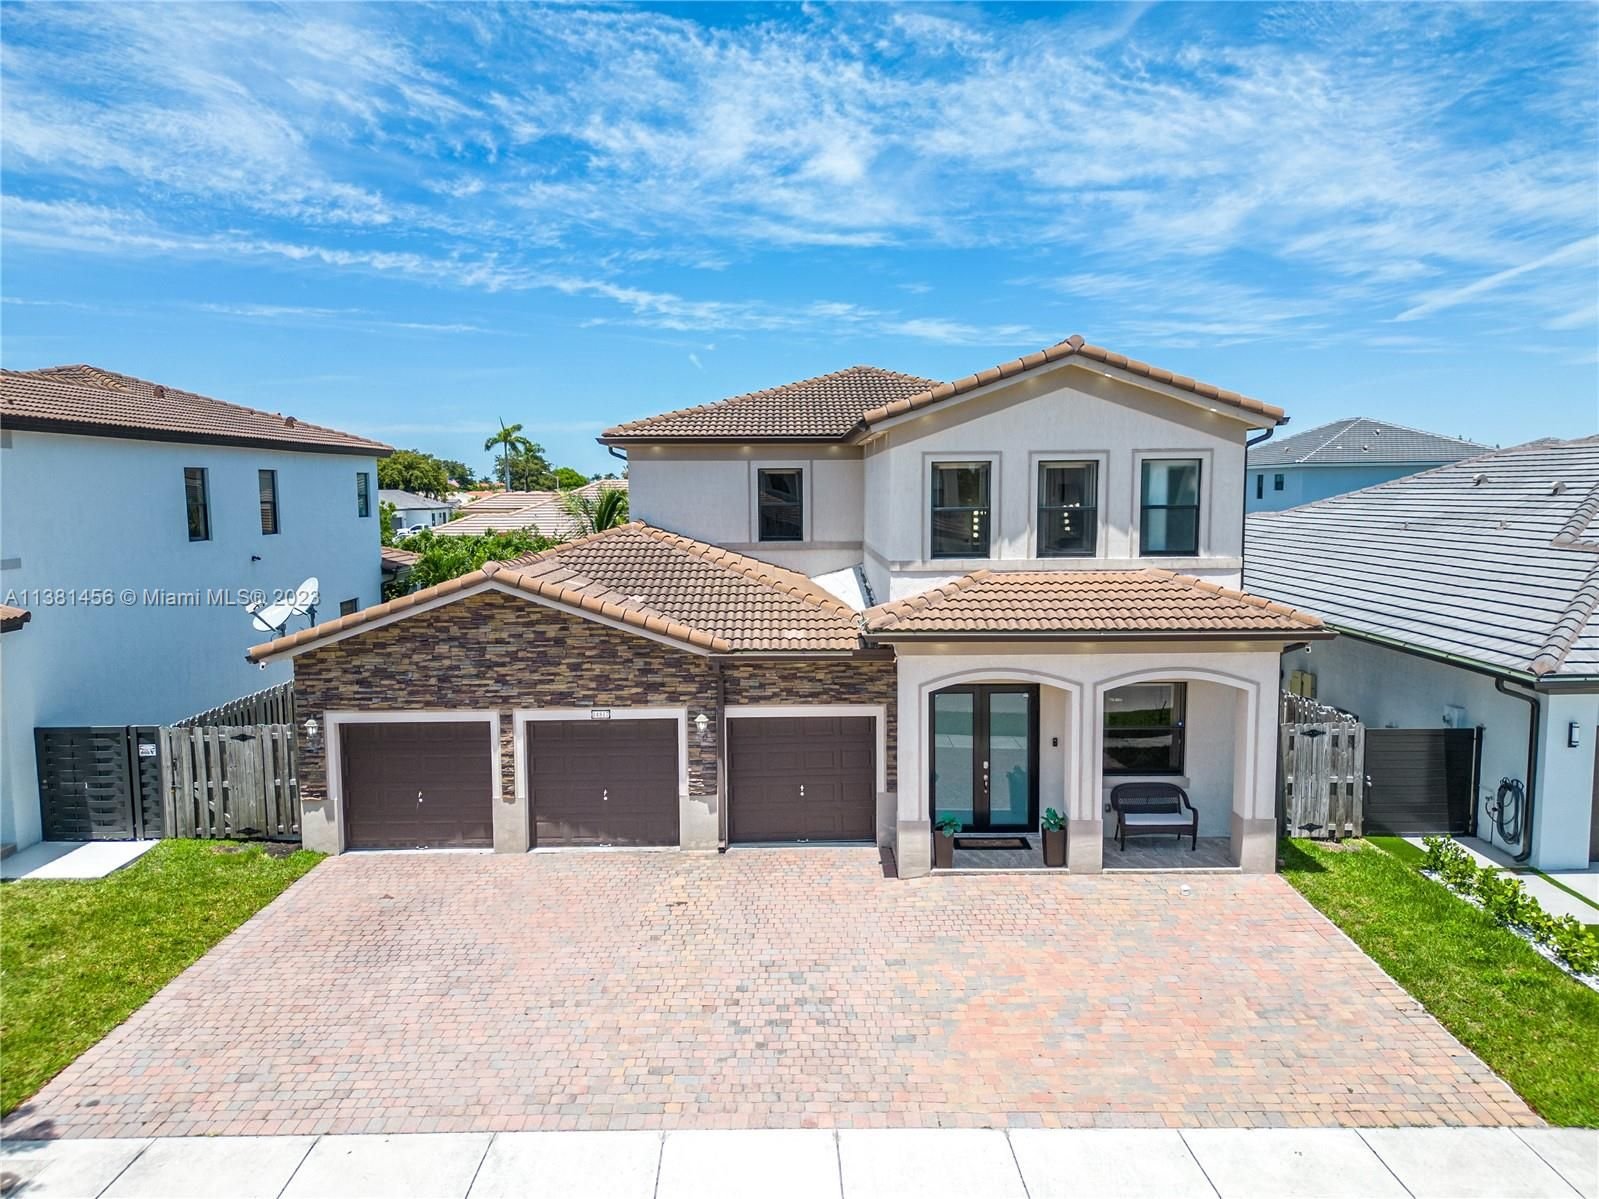 Real estate property located at 14817 39th Ter, Miami-Dade County, Miami, FL